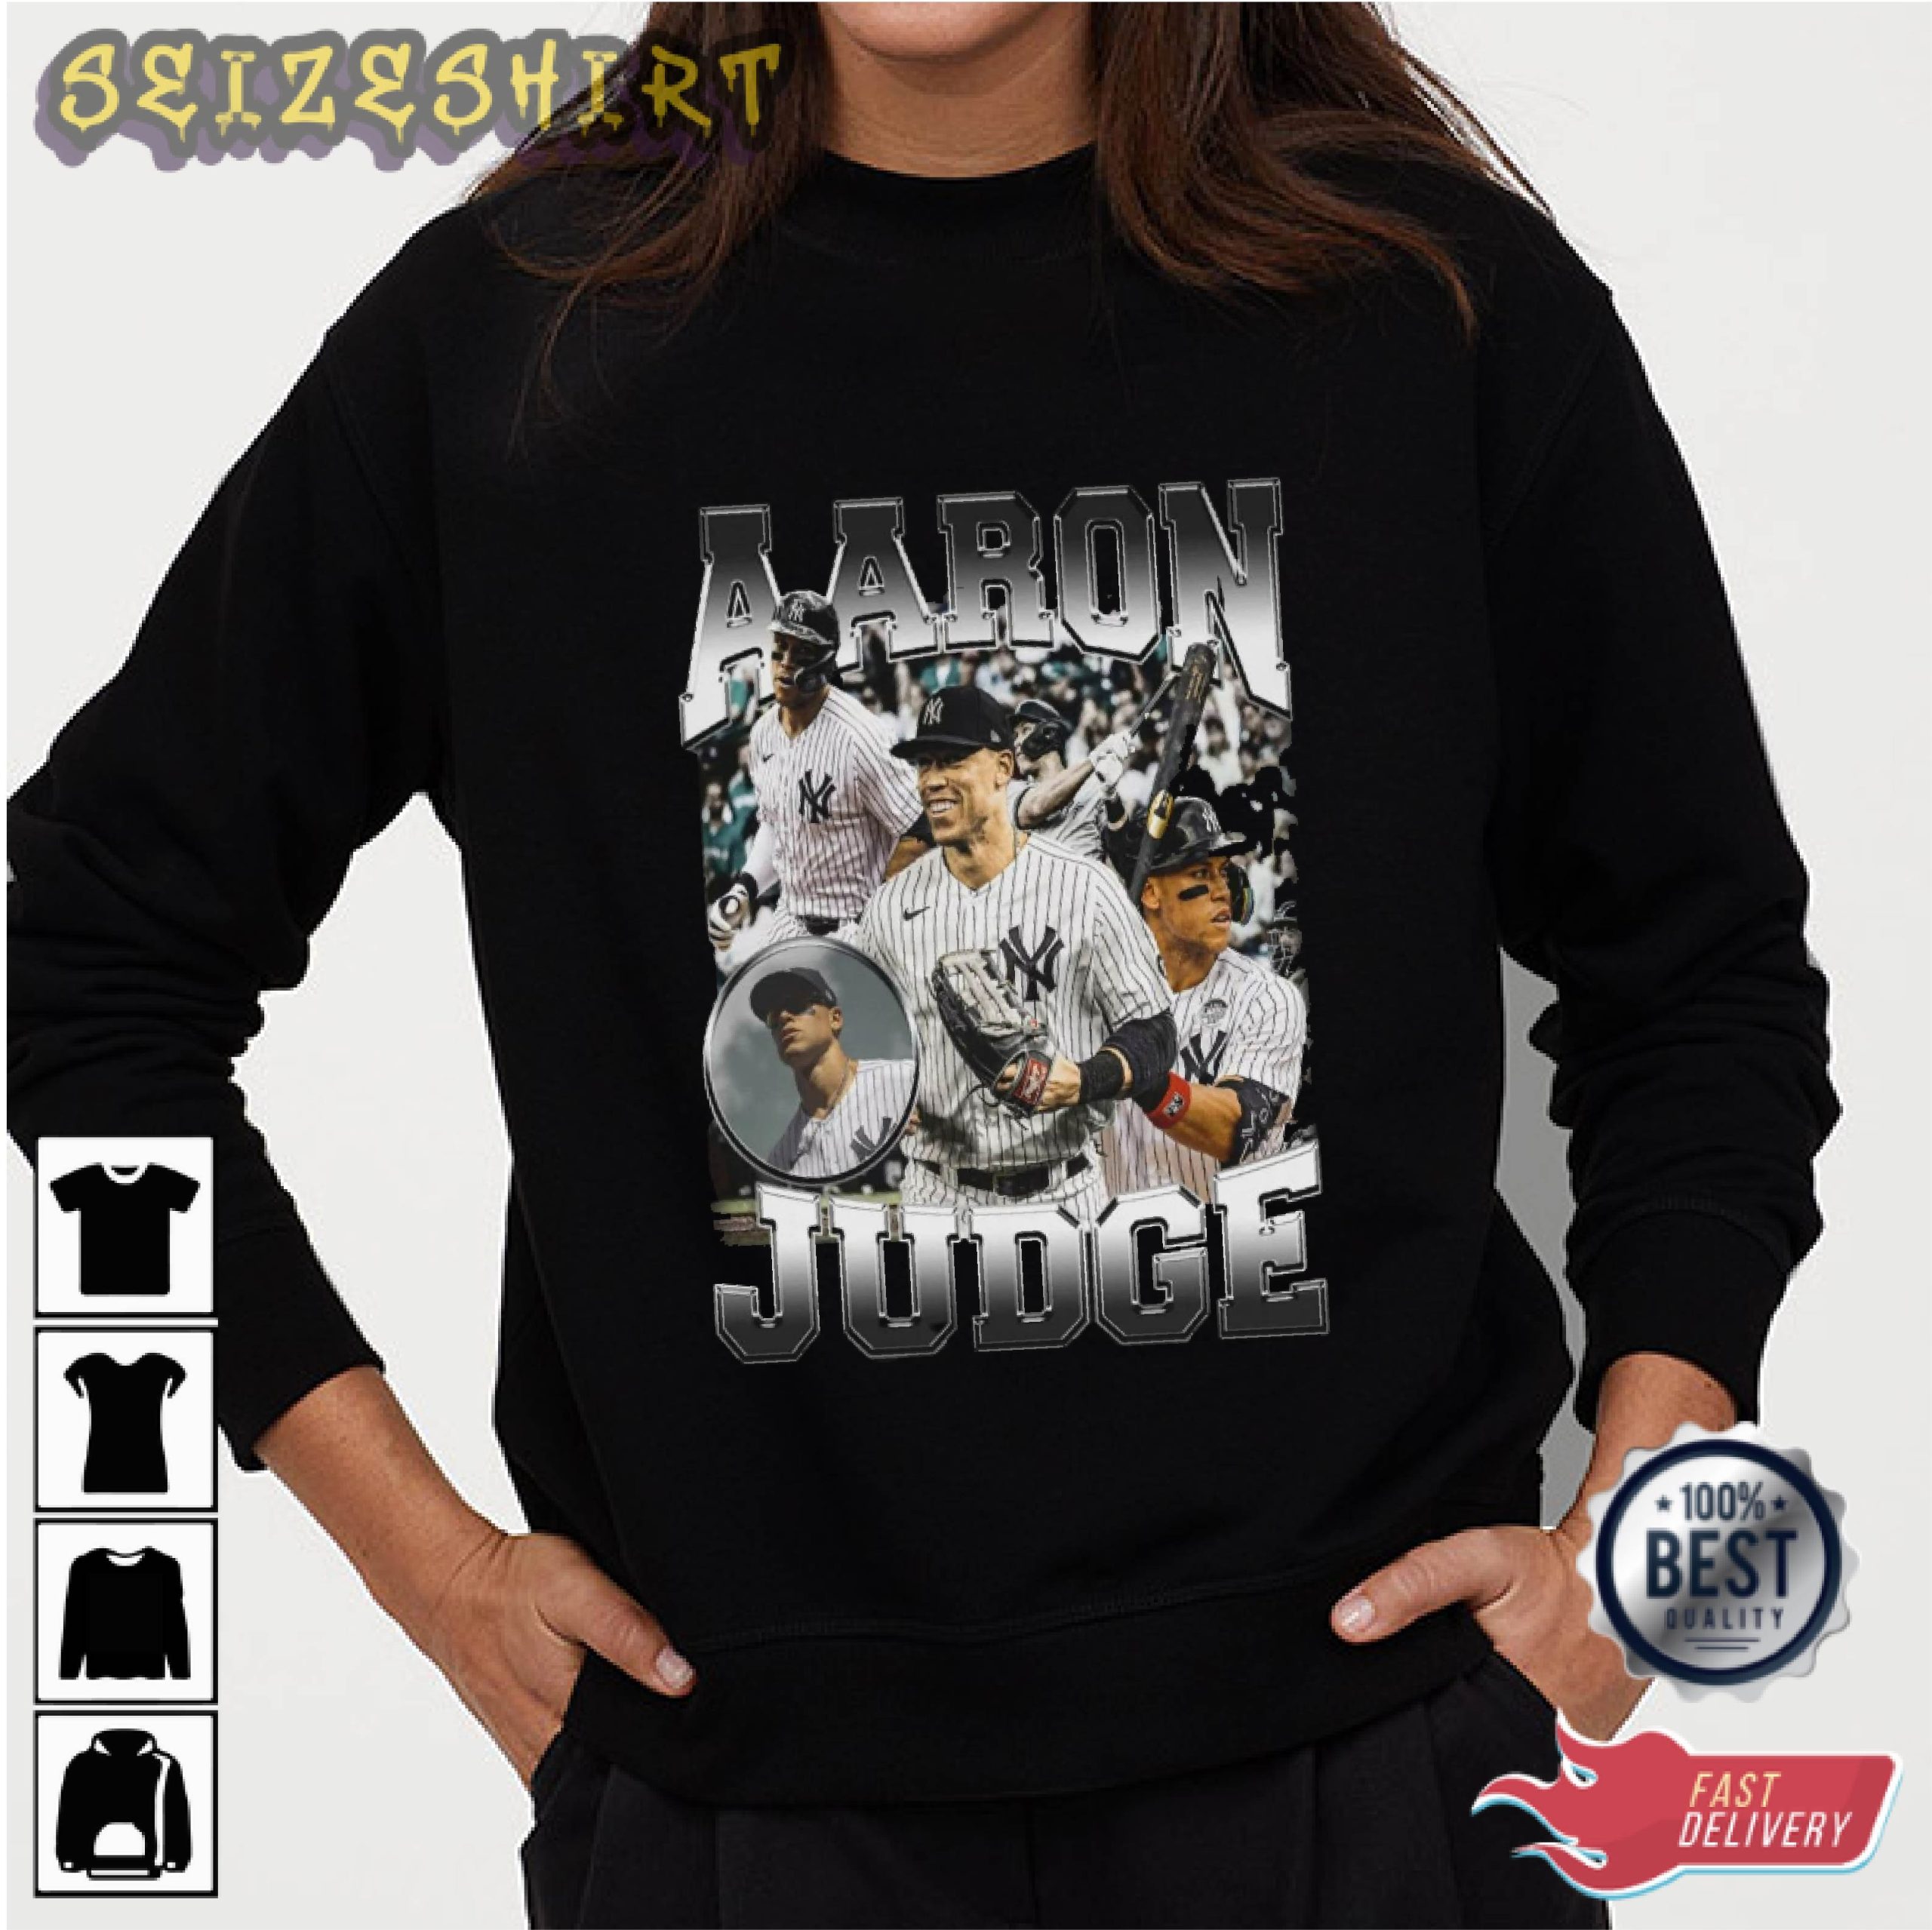 Aaron Judge Signature Baseball HOT Shirt 